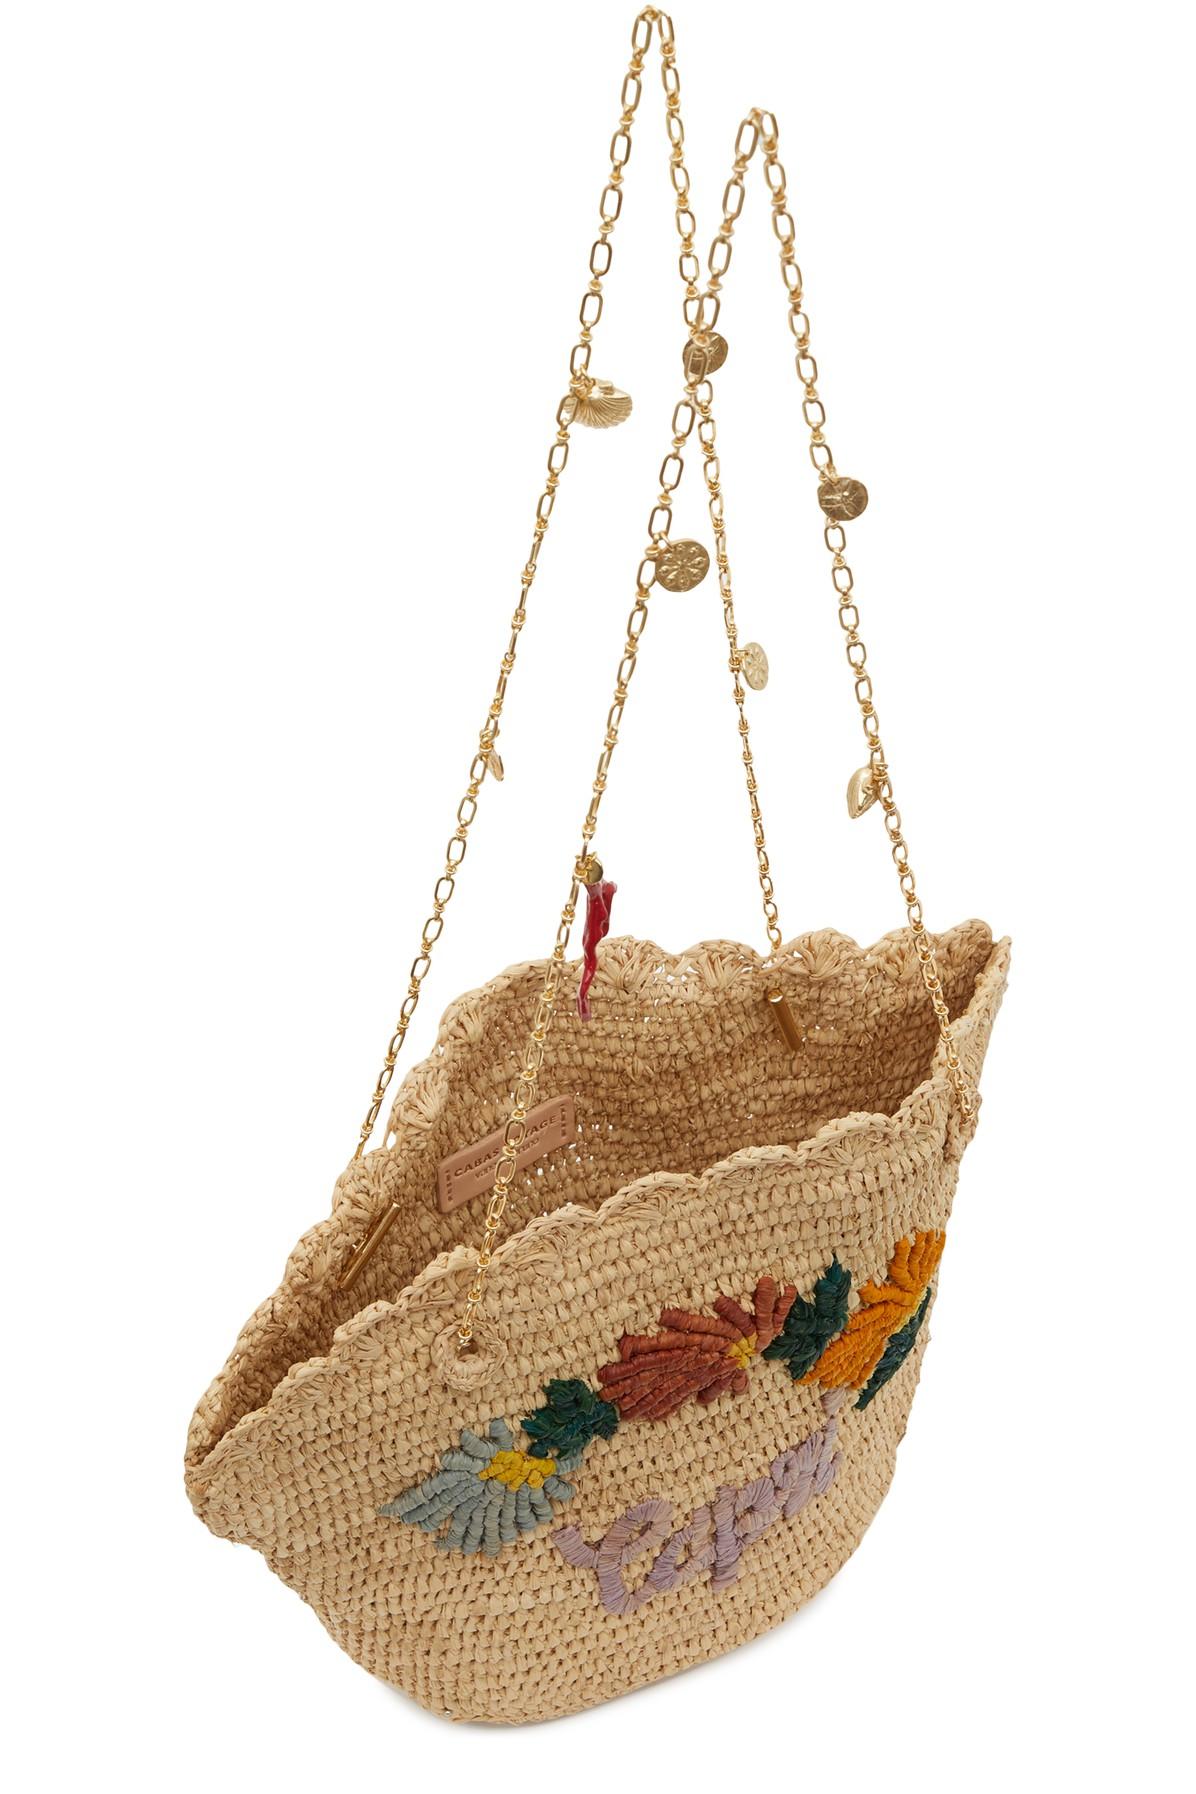 Vanessa Bruno Small Embroidered Raffia Basket | Lyst